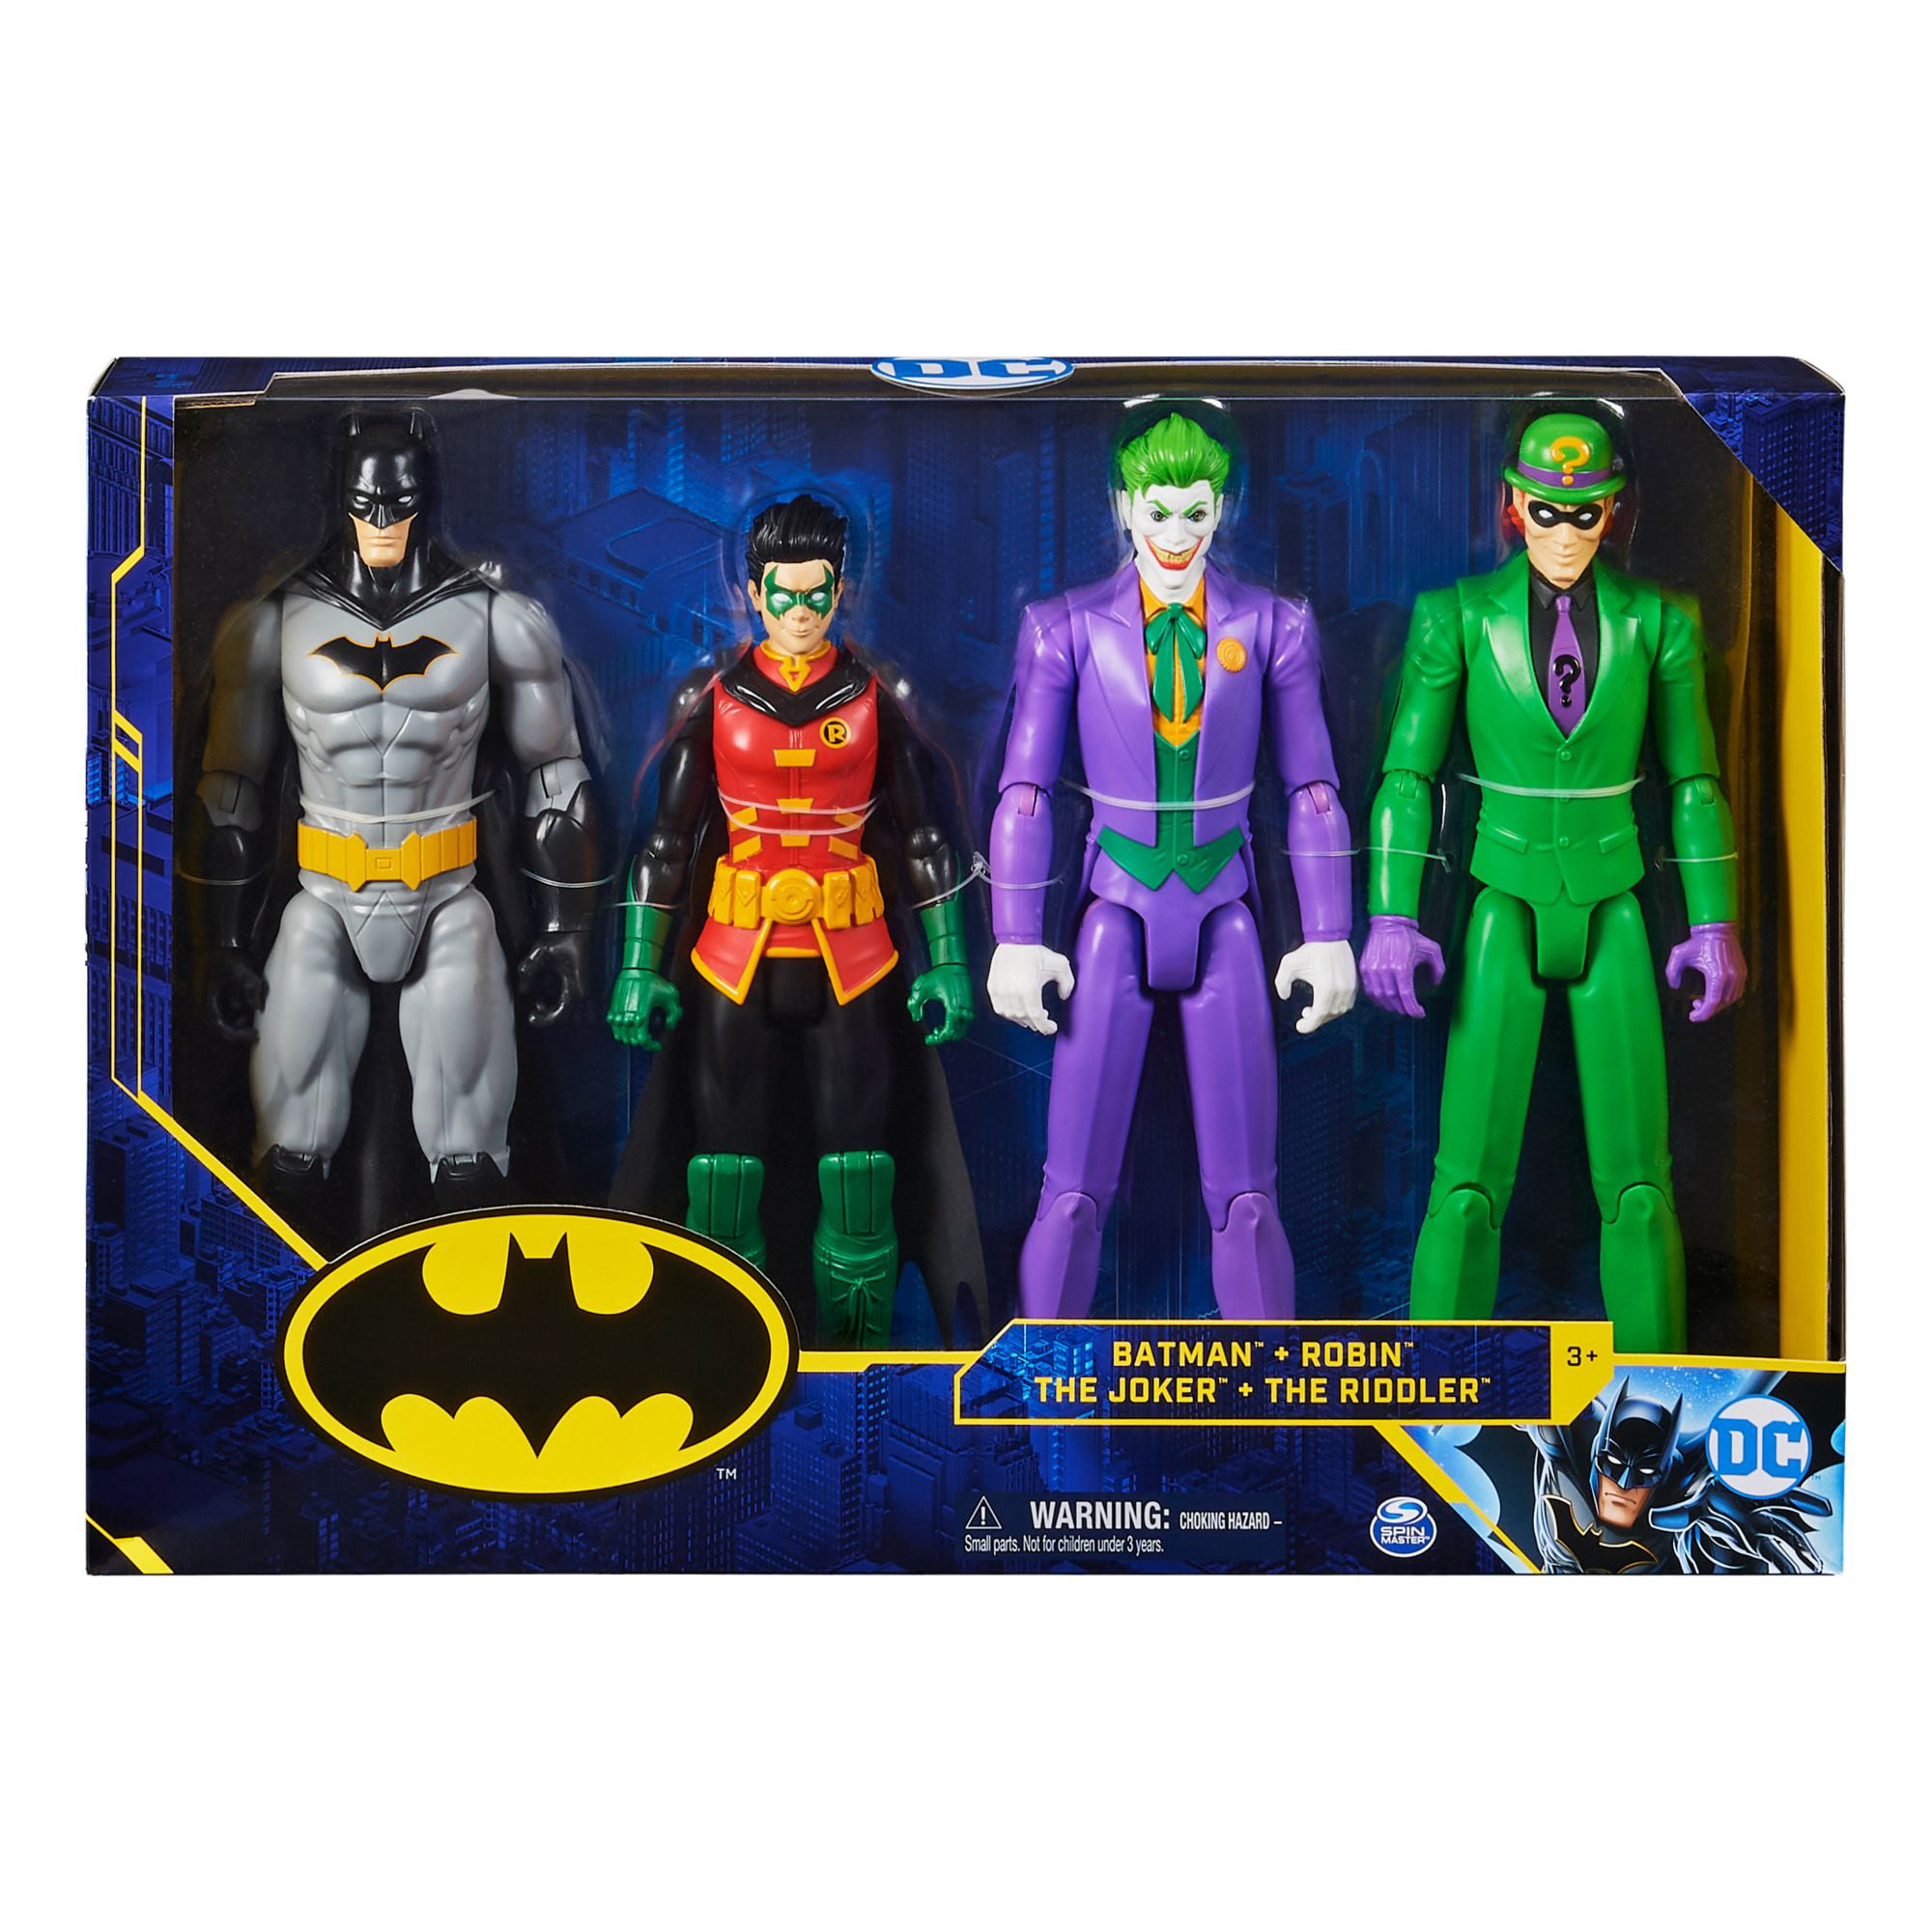 DC COMICS JUSTICE LEAGUE 6" inch figures Batman Superman The Flash Robin Joker 